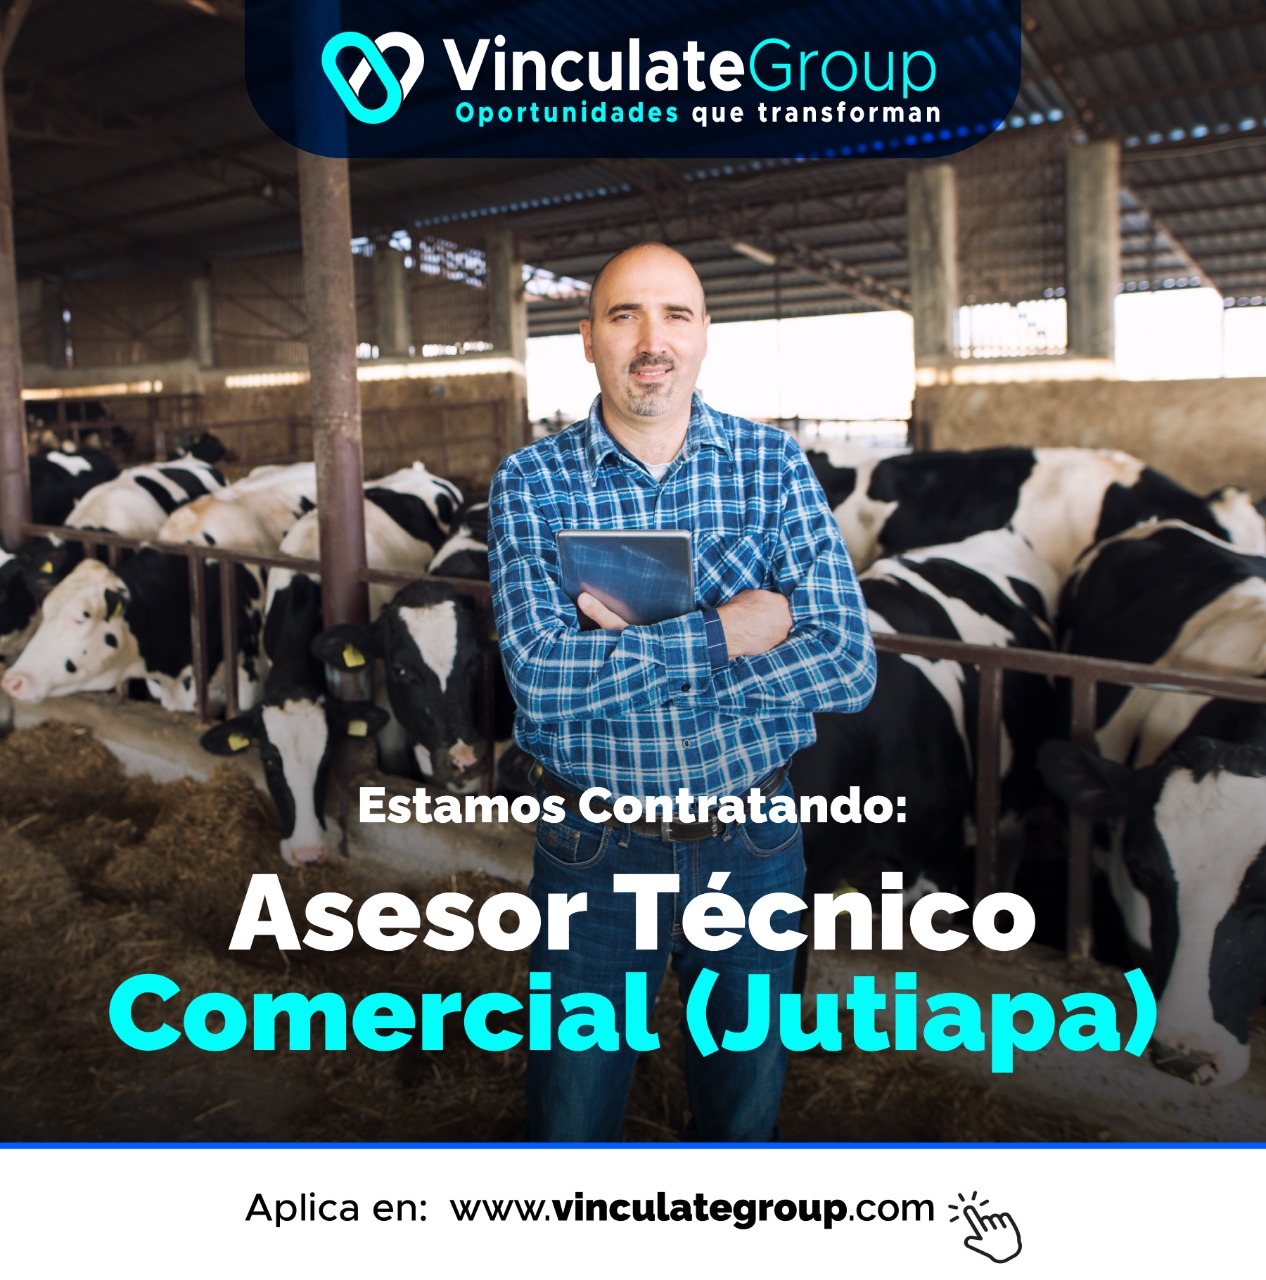 9% VinculateGroup
portunidades que transforman Pa

 

Comercial (Jutiapa)

 

Aplica en: www.vinculategroup.com Ty